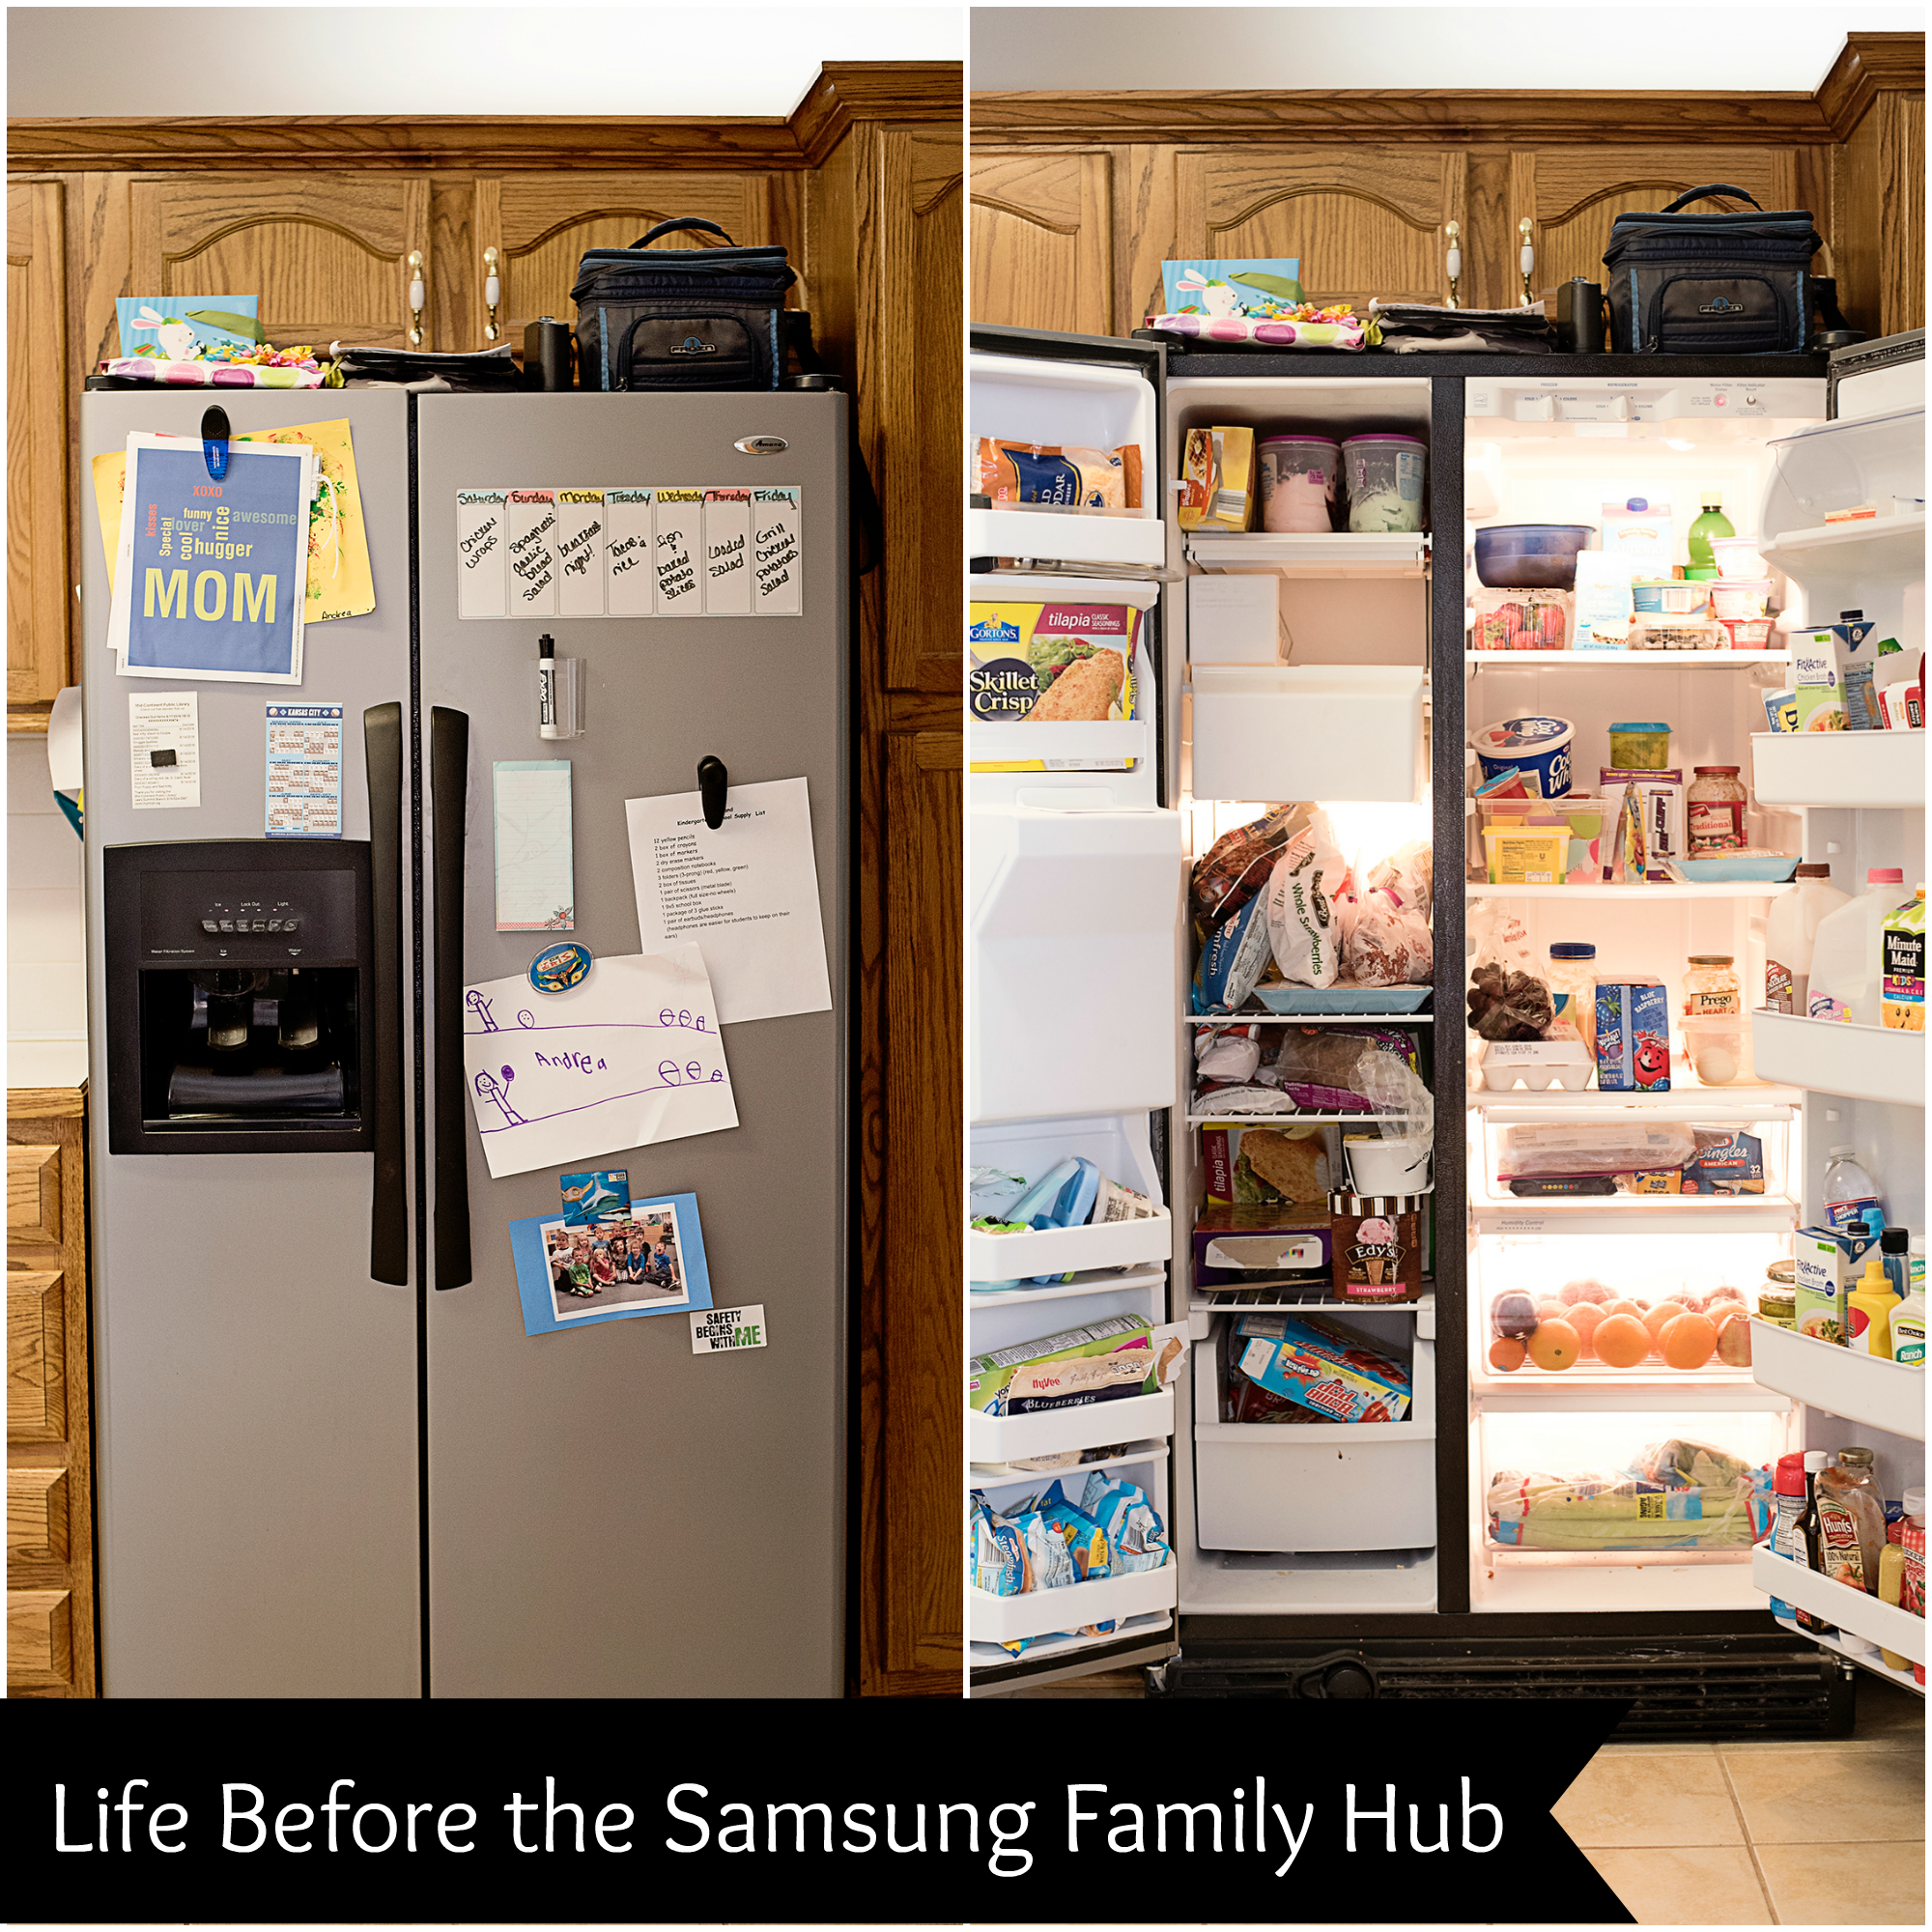 Samsung Smart Refrigerator with Family Hub from Nebraska Furniture